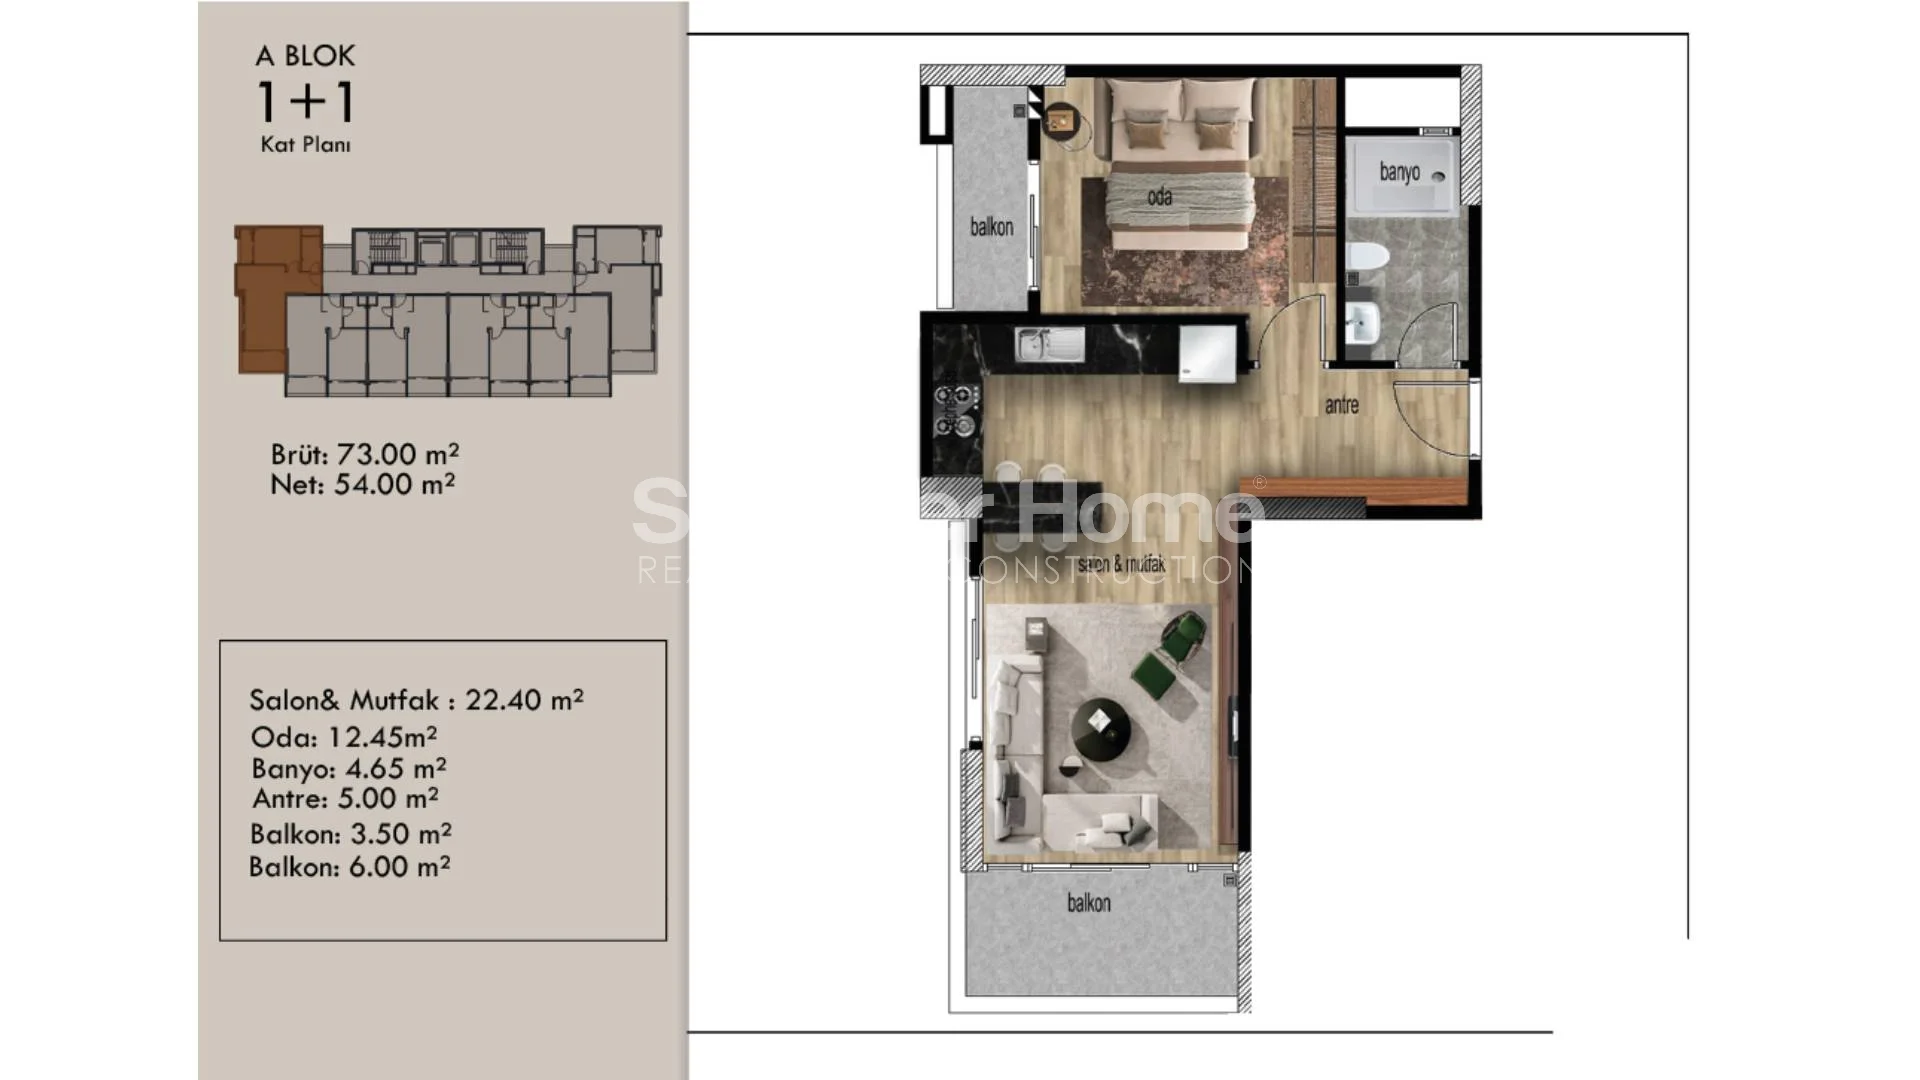 Jednosobni apartmani po pristupačnim cijenama, Arpacbahsis plan - 31